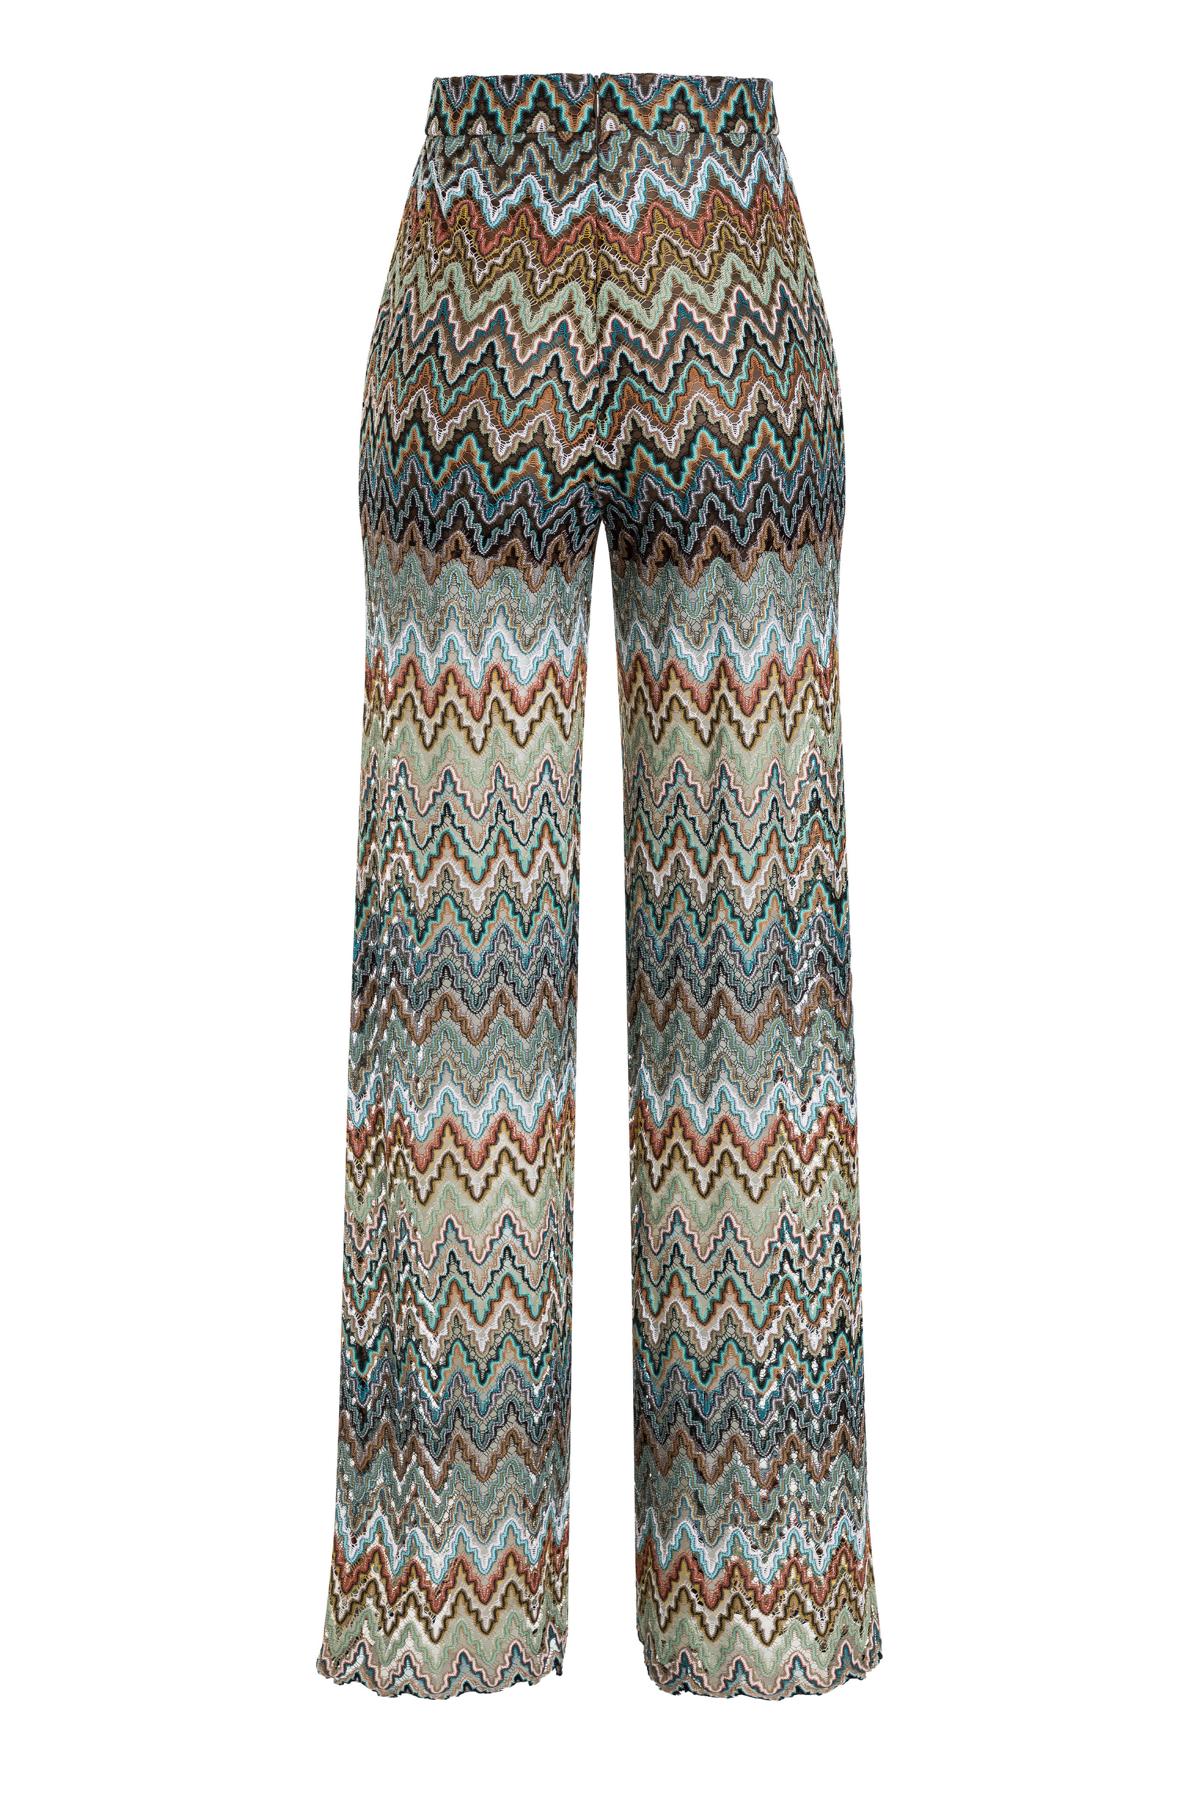 Beige-blue wide pant Sostis from zig-zag knit | Ana Alcazar